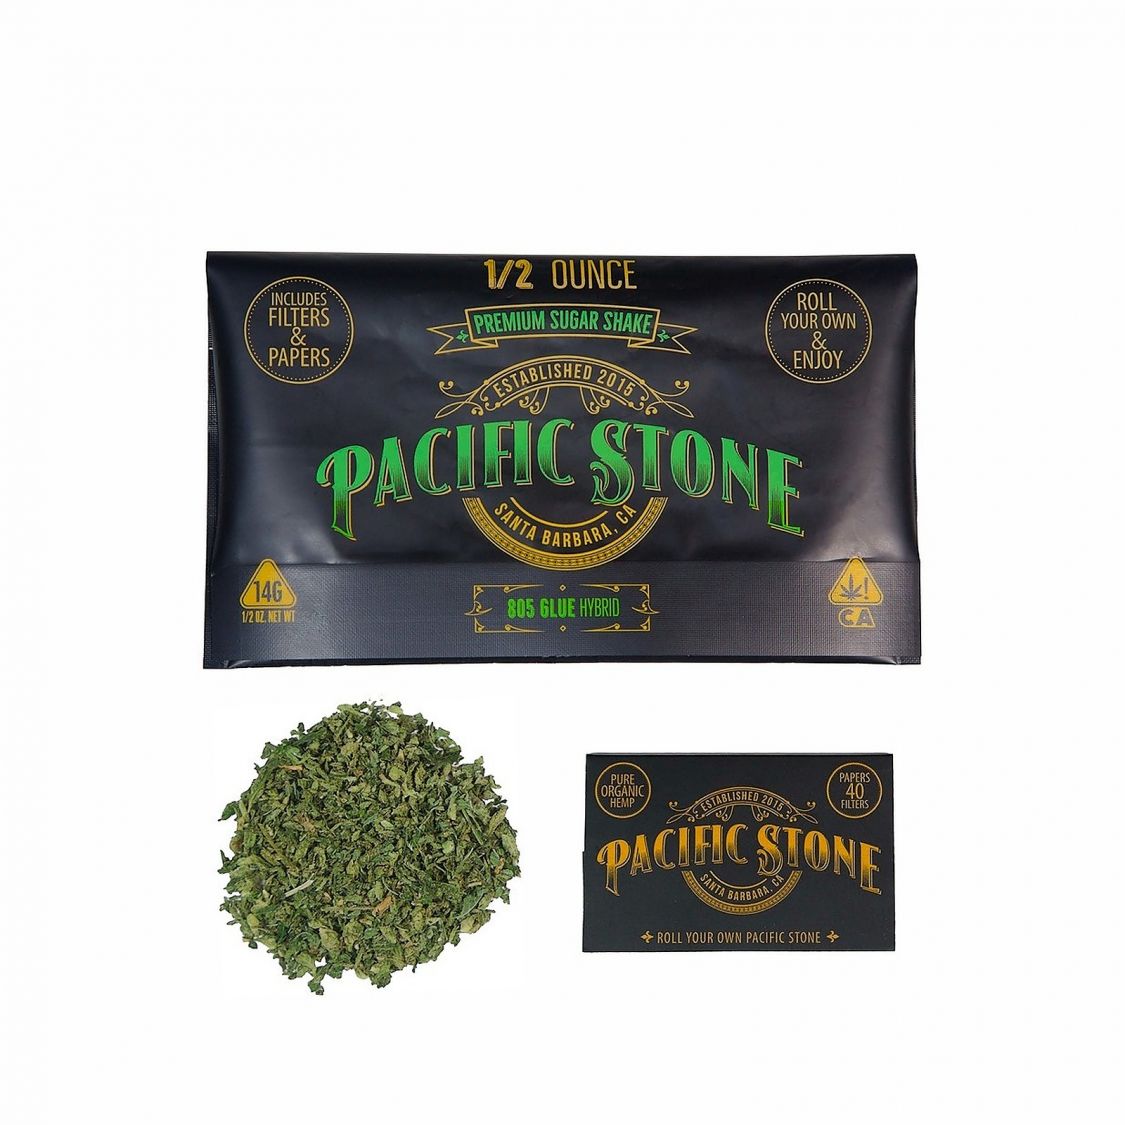 Pacific Stone 805 Glue Roll-Your-Own Sugar Shake Flower Shake